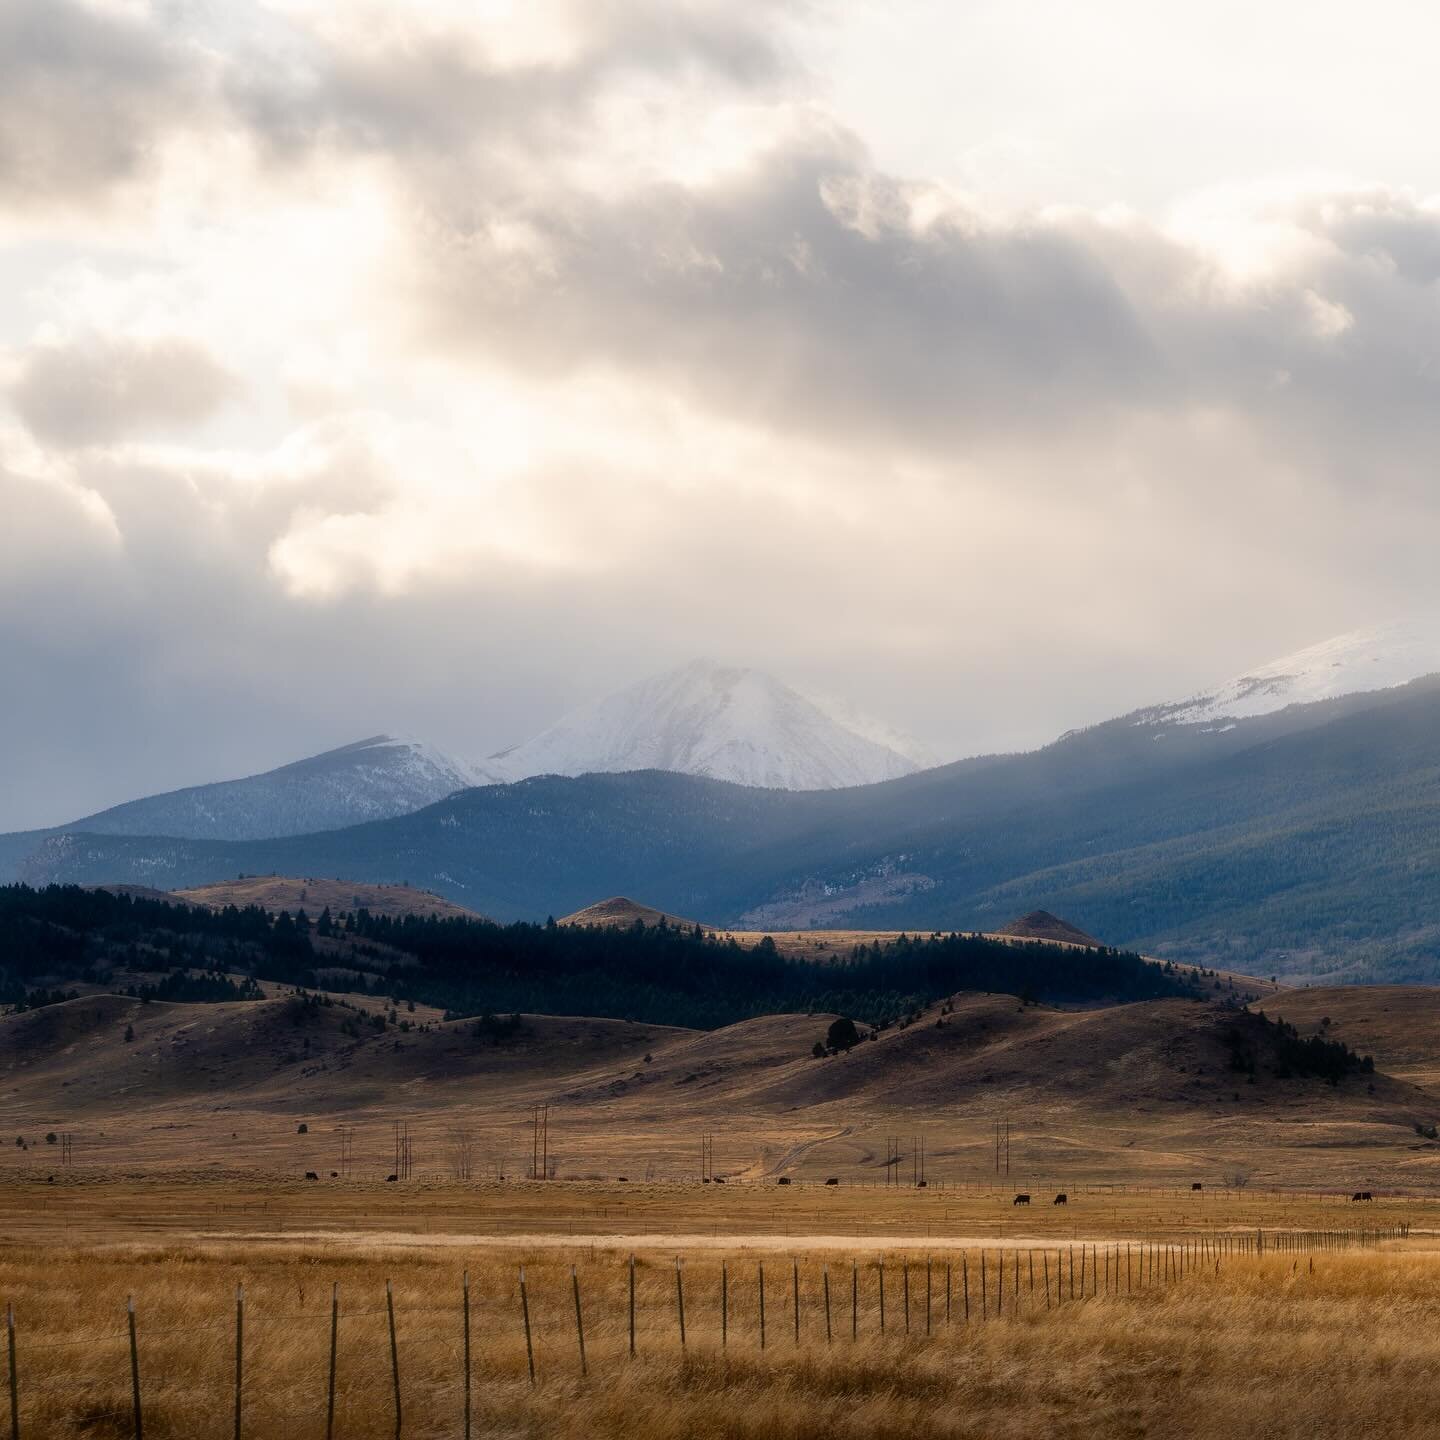 Anaconda Montana

www.unverzagtimages.com

#montanamoment #BigSkyCountry #MountainMagic #FallSnow #NaturePhotography #WildernessCulture #SnowyPeaks #MontanaLife #OutdoorAdventures #LandscapeLovers #MountainView #AutumnSnow #TravelMontana #HikingMonta